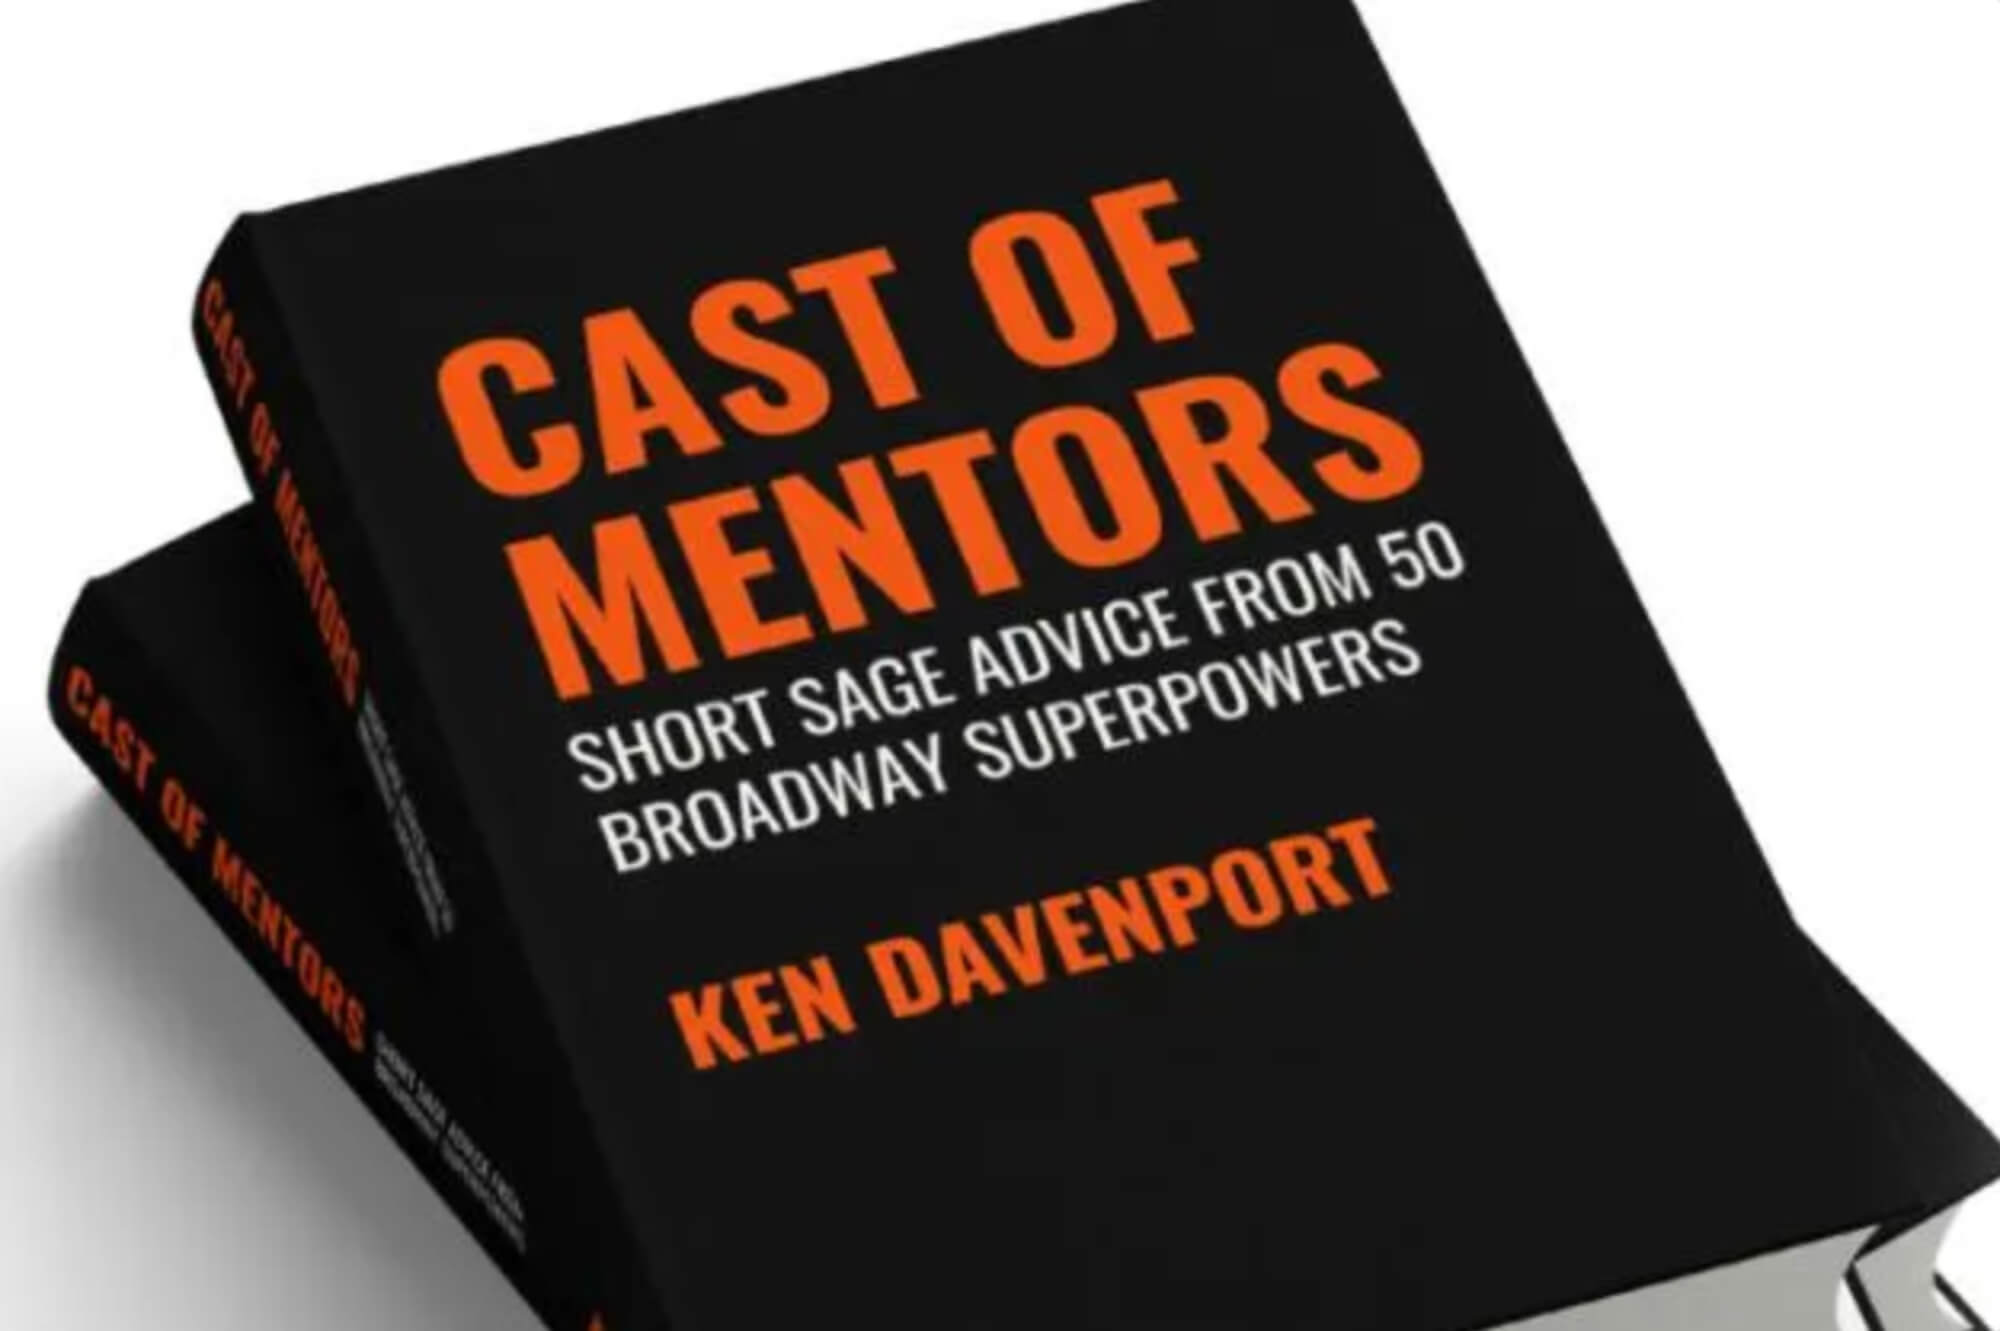 Tony-Winning Producer Ken Davenport Writes ‘Cast of Mentors’